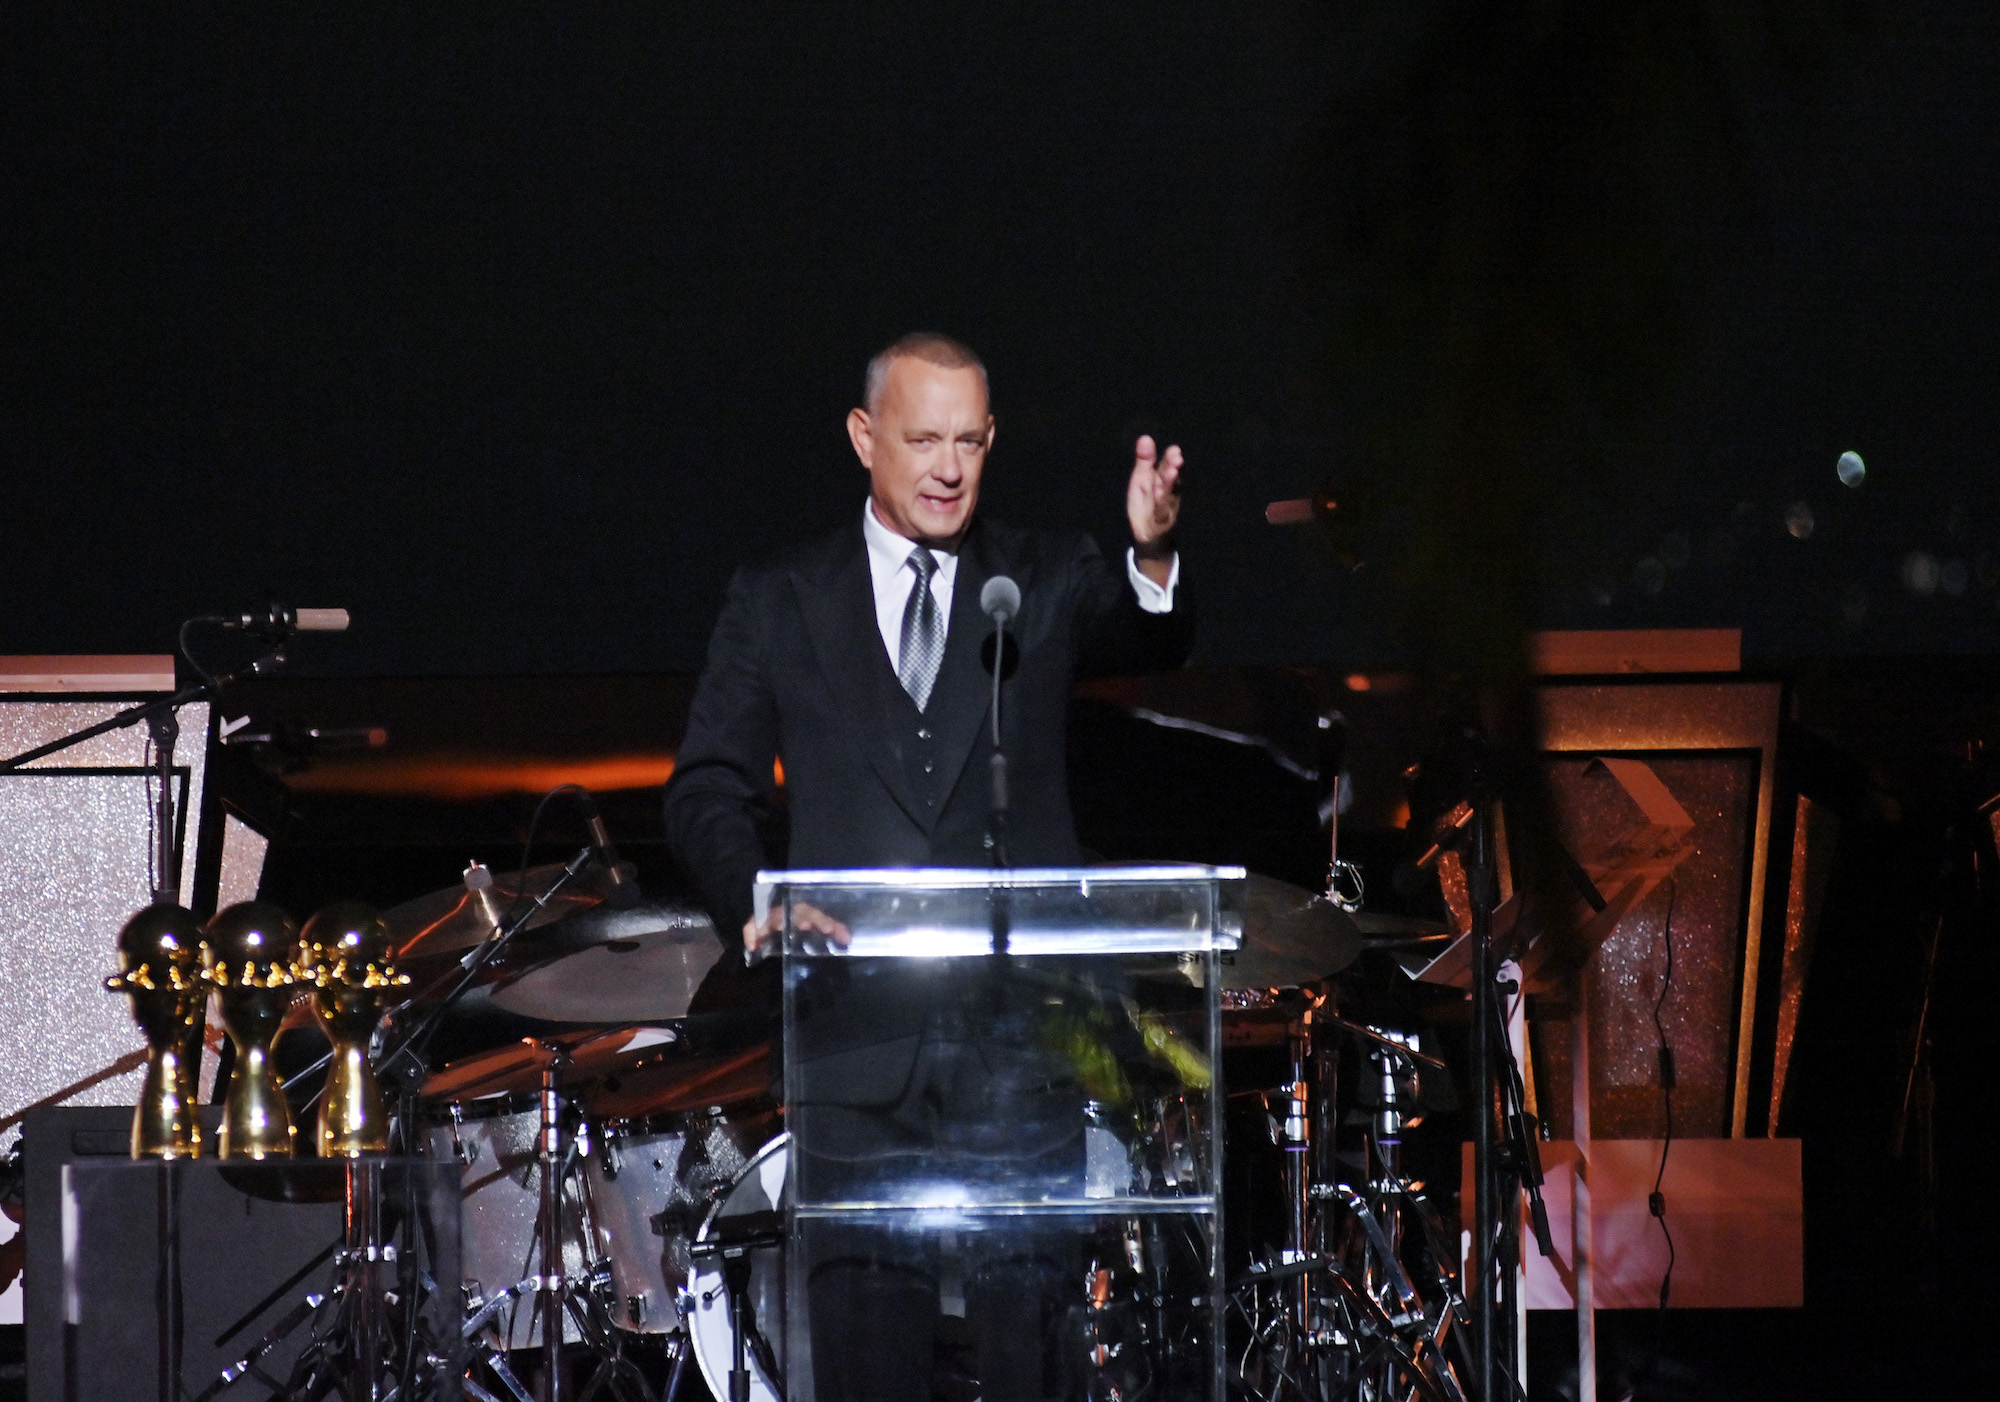 Tom Hanks speaks at a podium